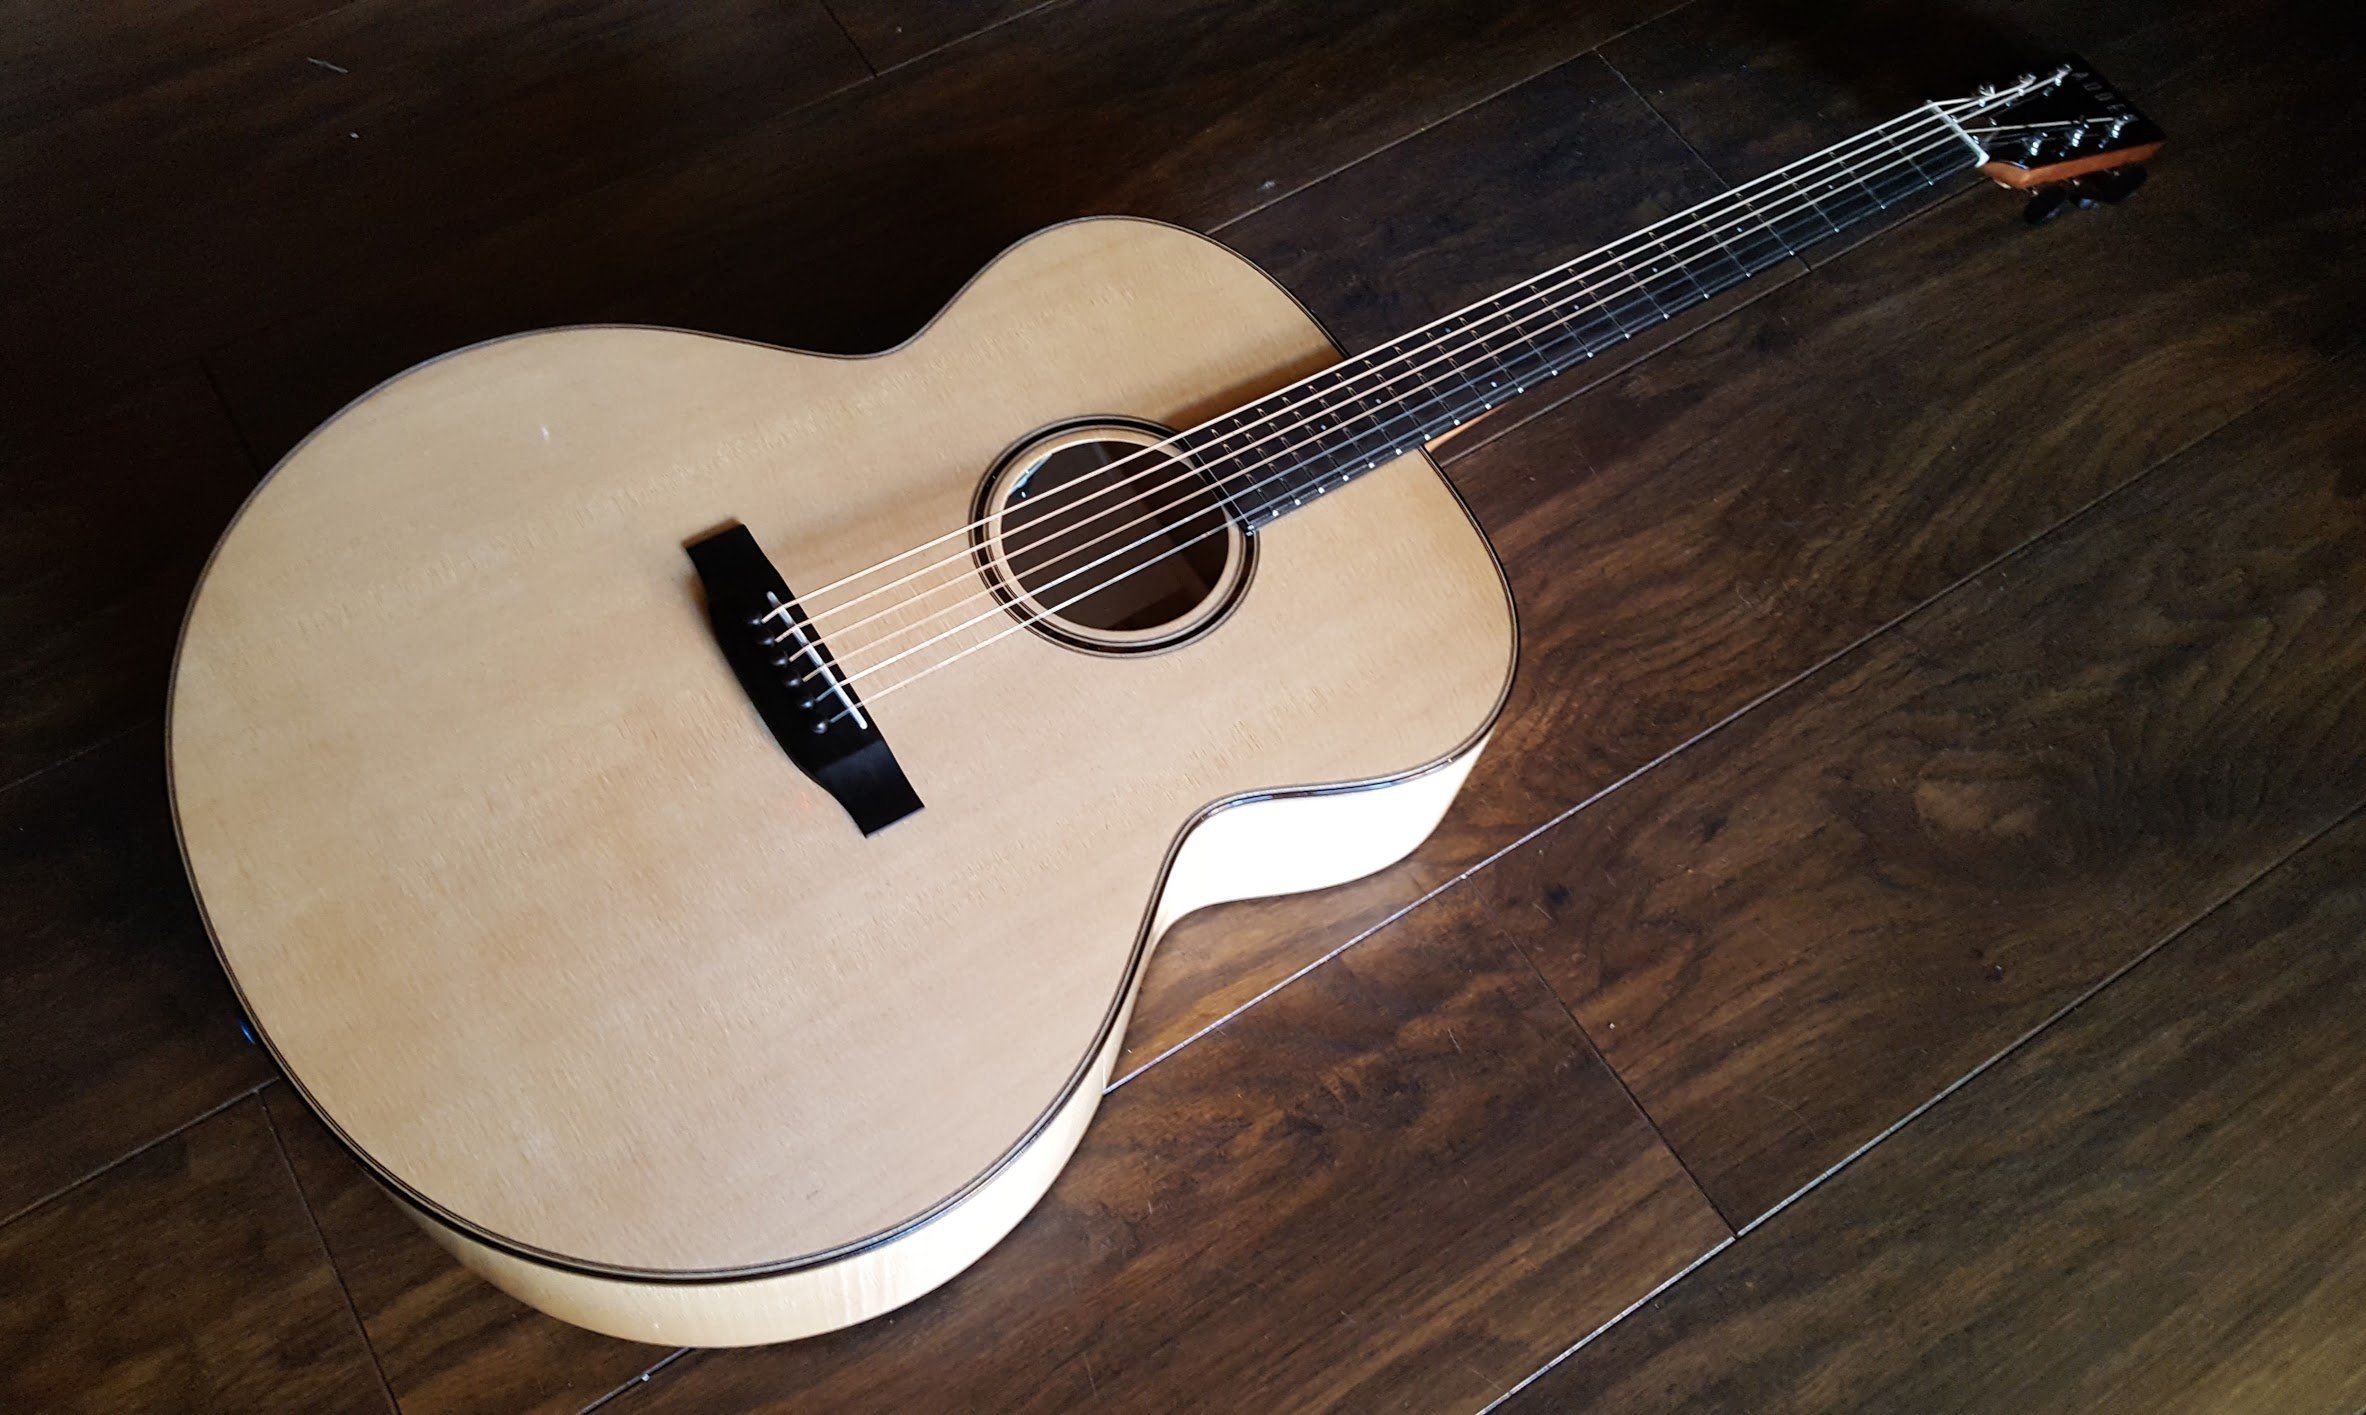 AUDEN MAPLE SERIES – GRACE JUMBO, Electro Acoustic Guitar for sale at Richards Guitars.